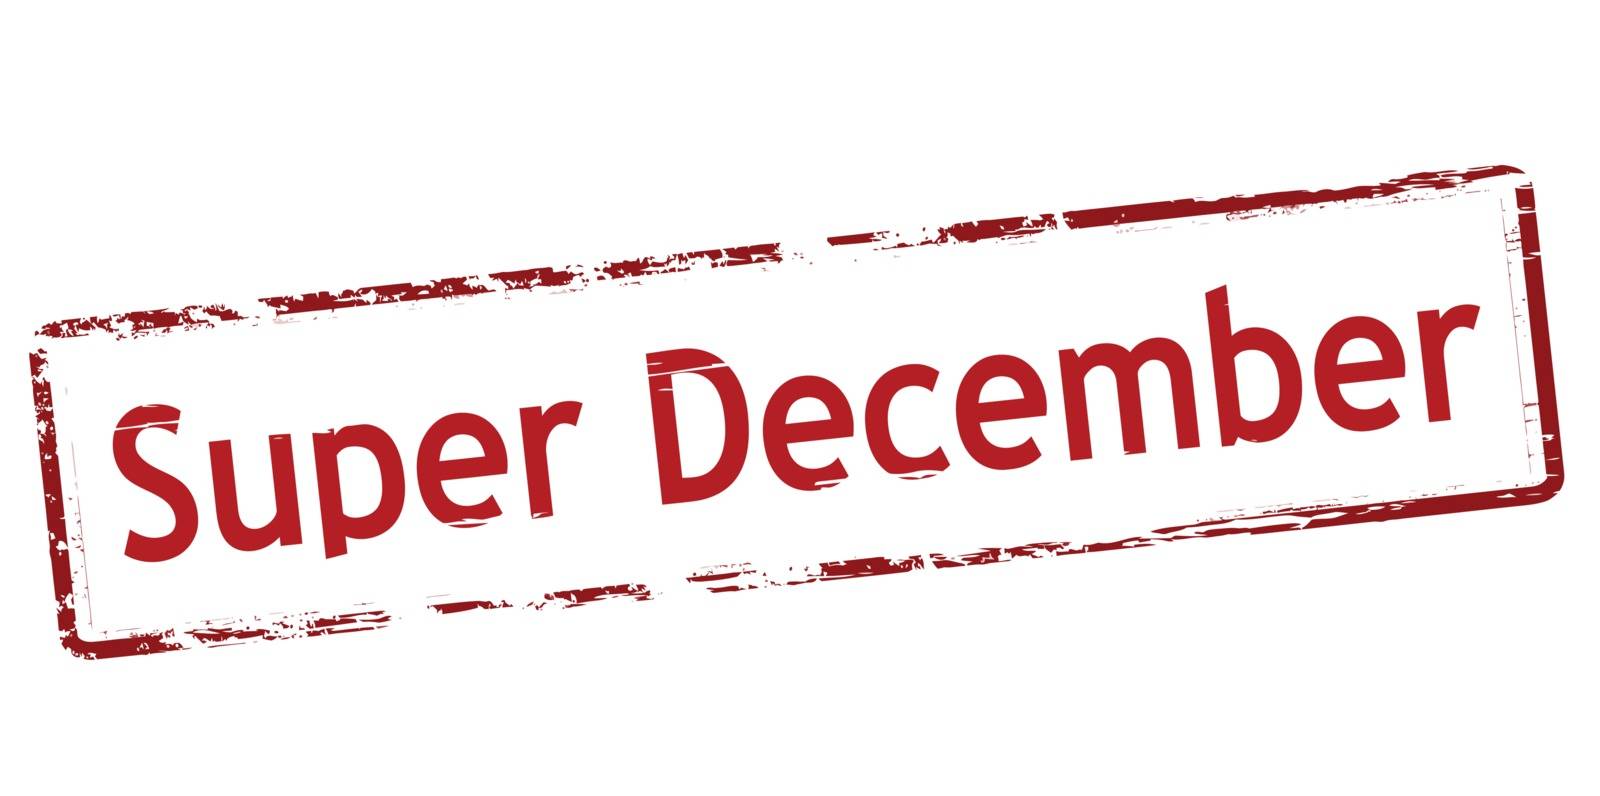 Super December by carmenbobo